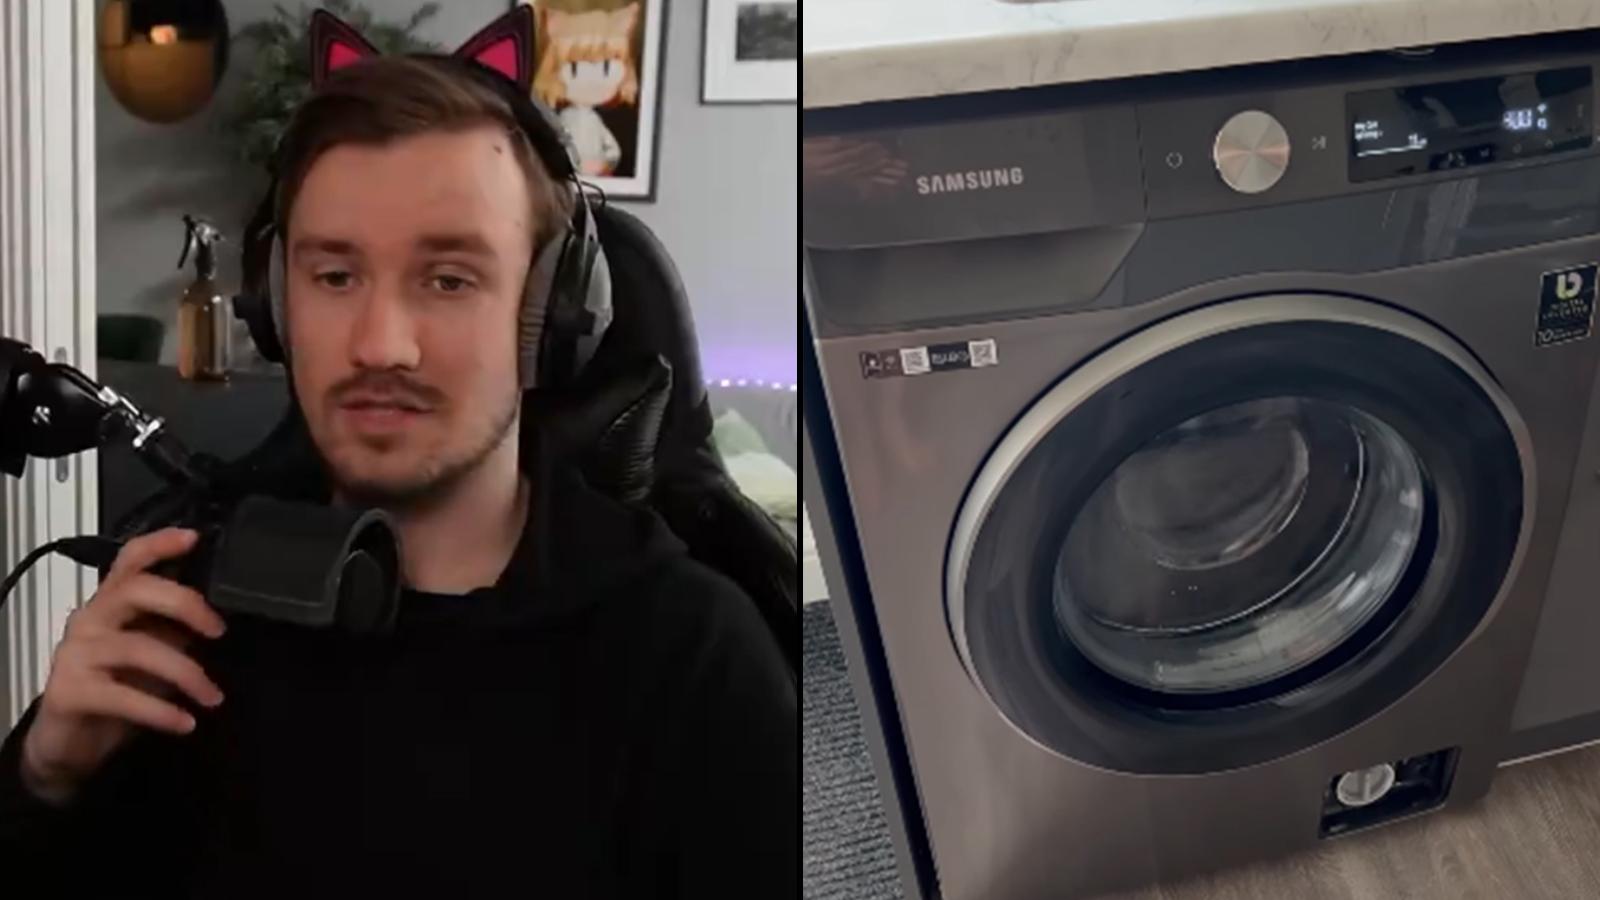 youtuber-furious-copyright-id-samsung-washing-machine